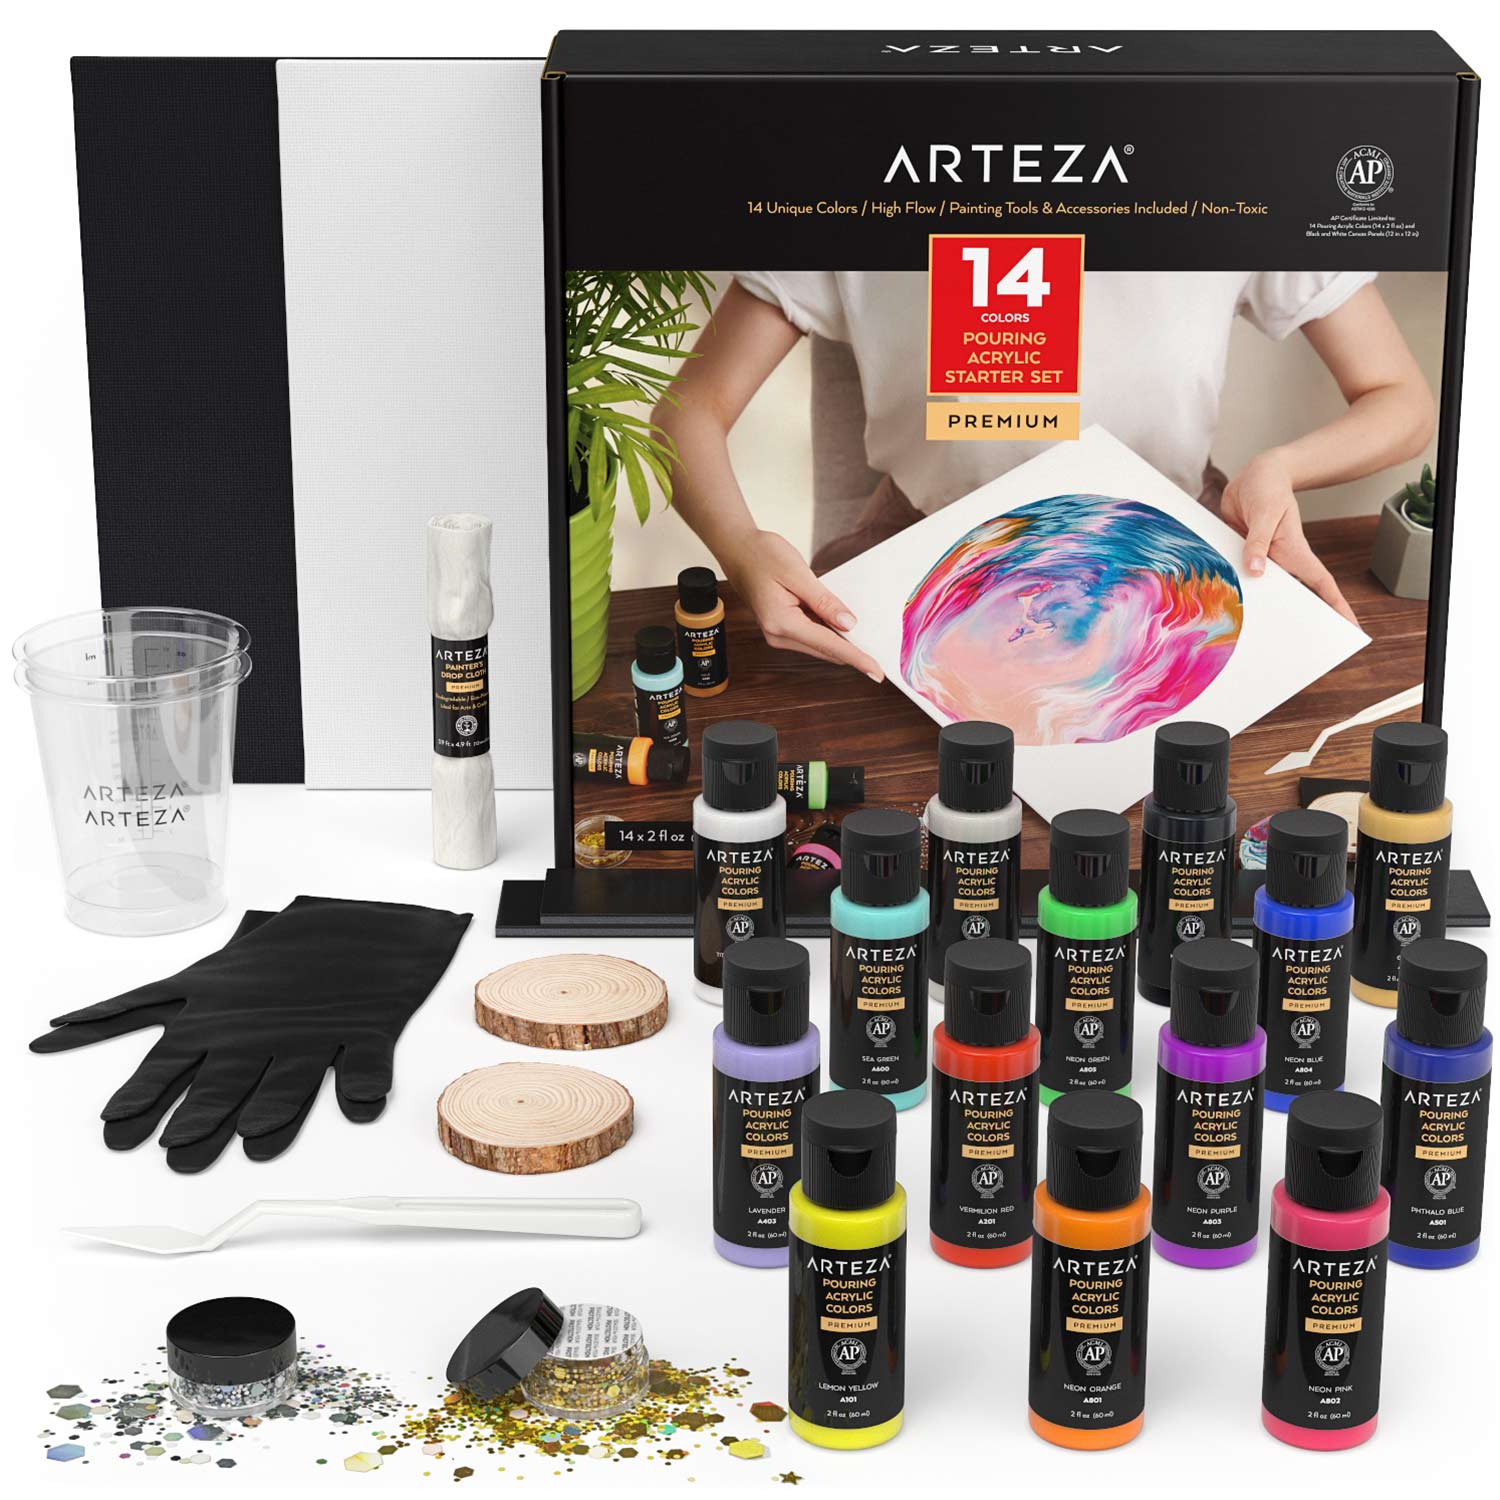 Arteza Pouring Acrylic Paint, Iridescent Vibrant Tones, 4oz Bottles - Set of 4